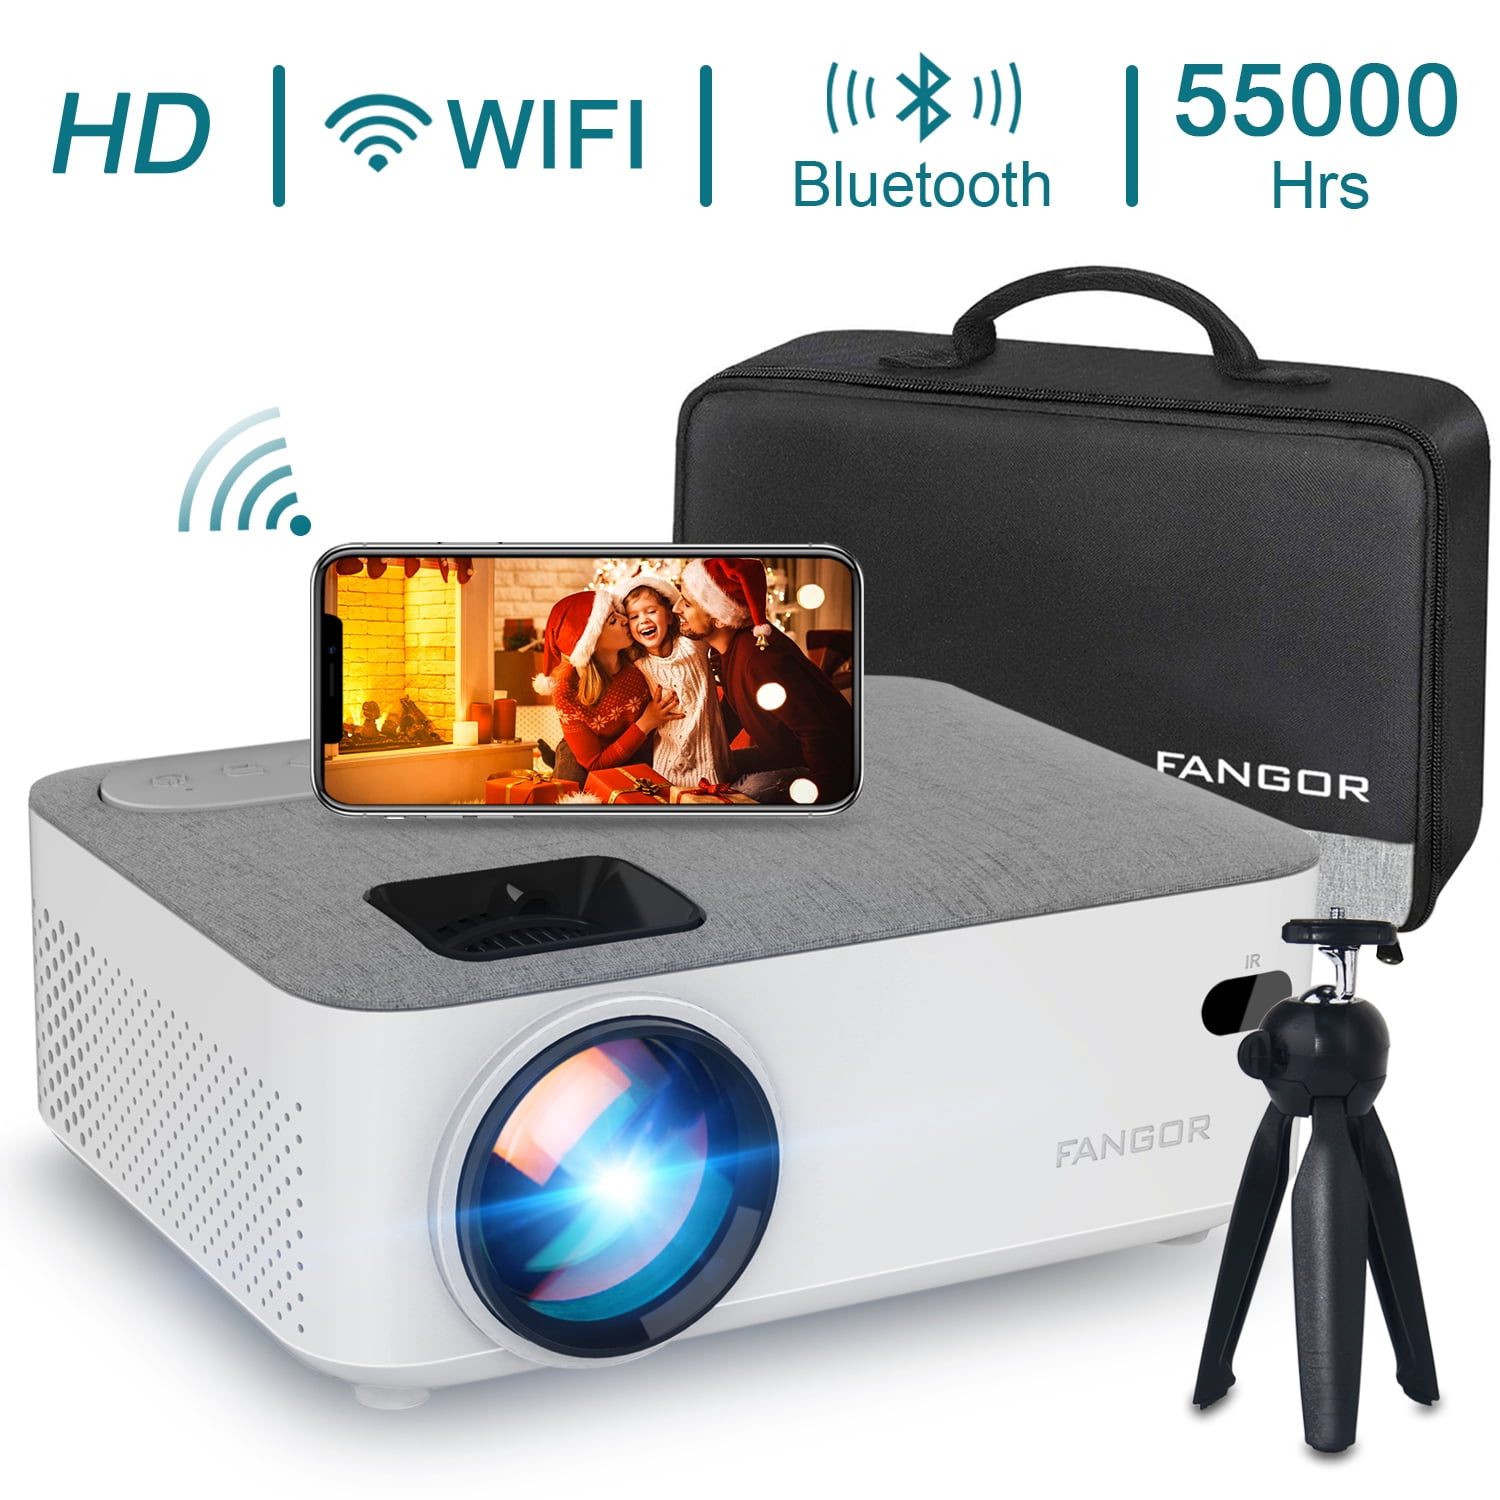 FANGOR Performance 701 Native 1080P Full HD Video Projector,Full 